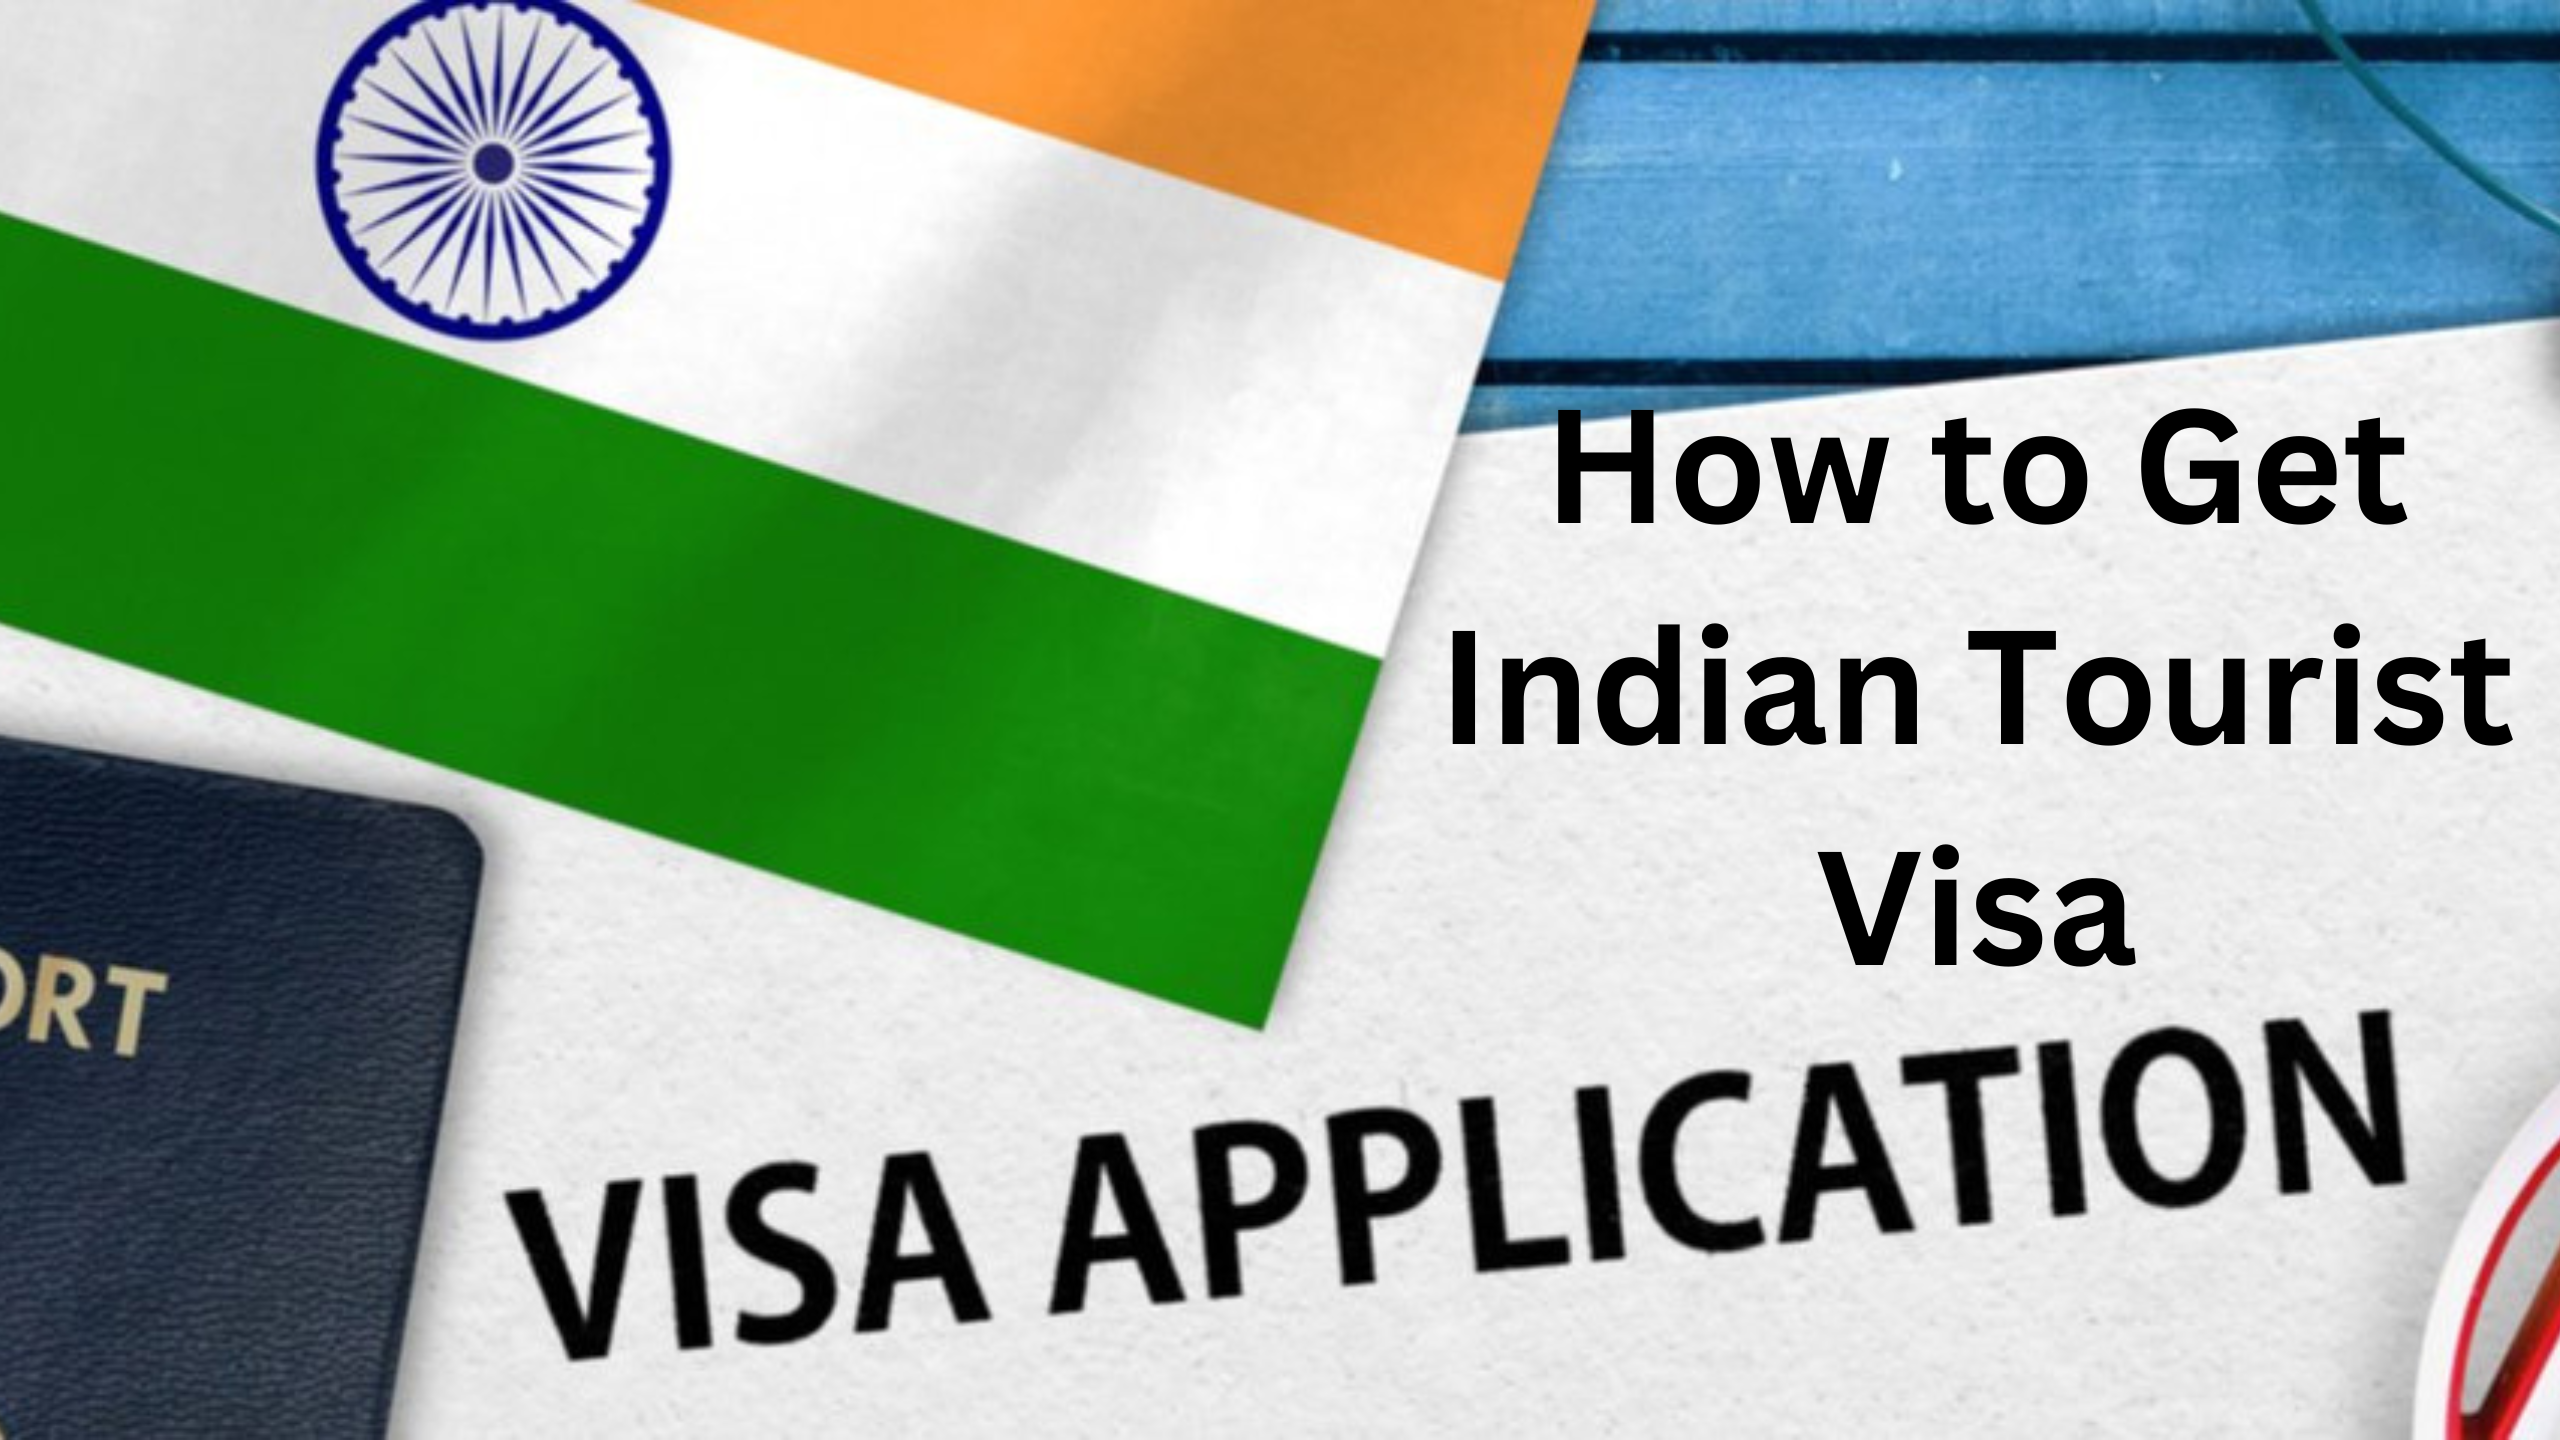 How to Get Indian Tourist Visa